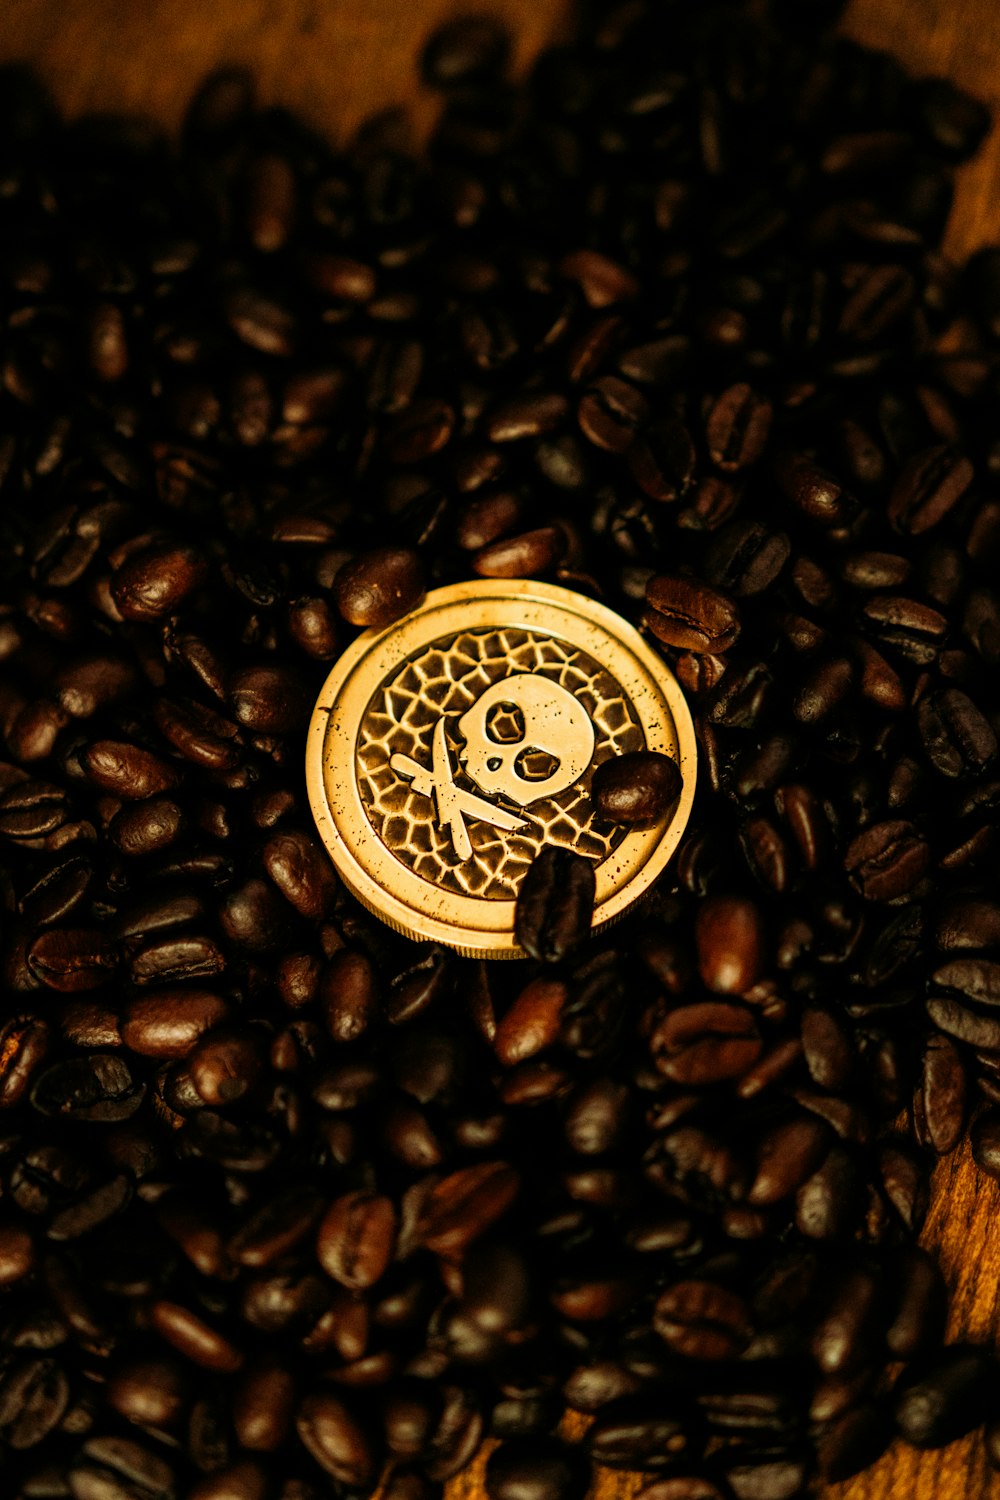 Granos de café marrón sobre superficie negra